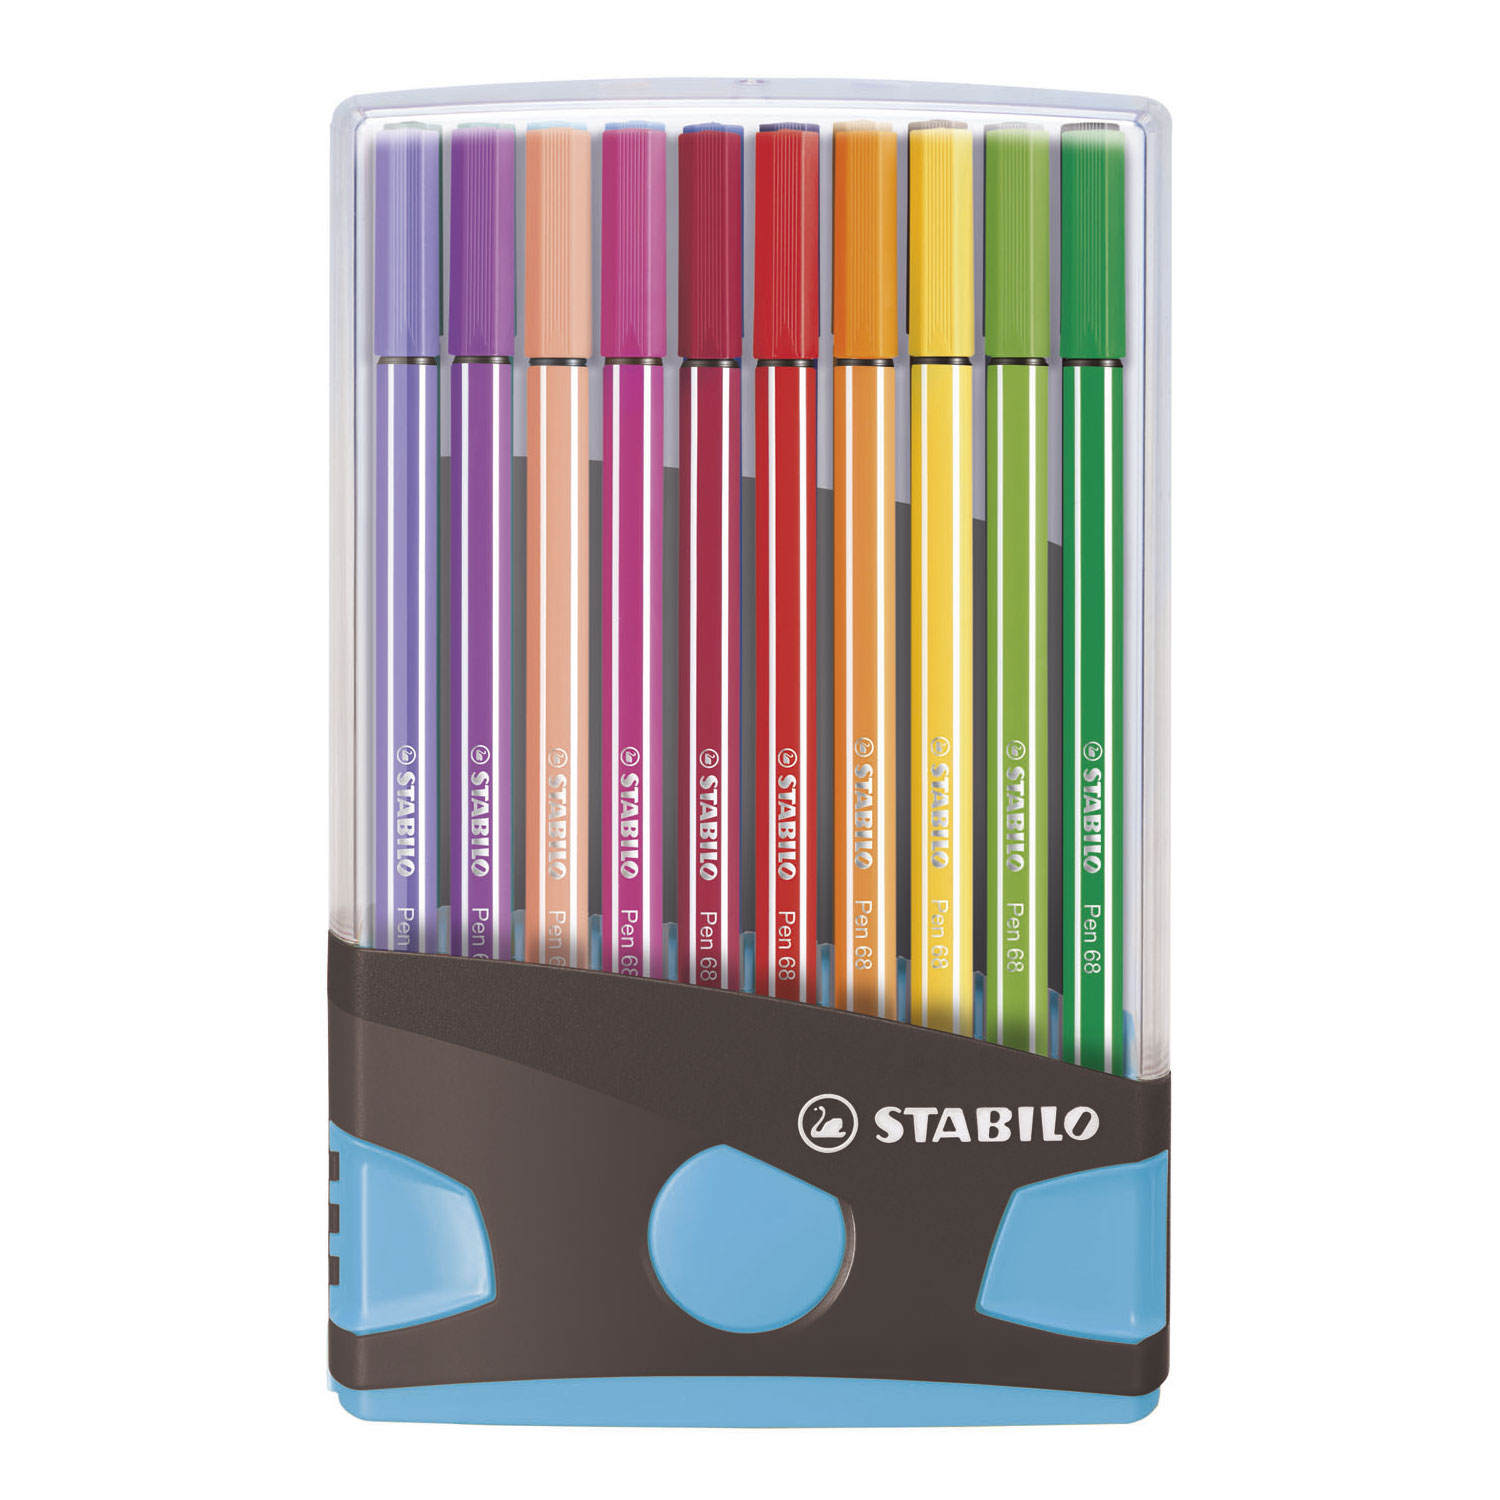 Onaangeroerd Regenjas zege STABILO Pen 68 Colorparade Anthracite / Light blue, 20 pieces. | Thimble  Toys